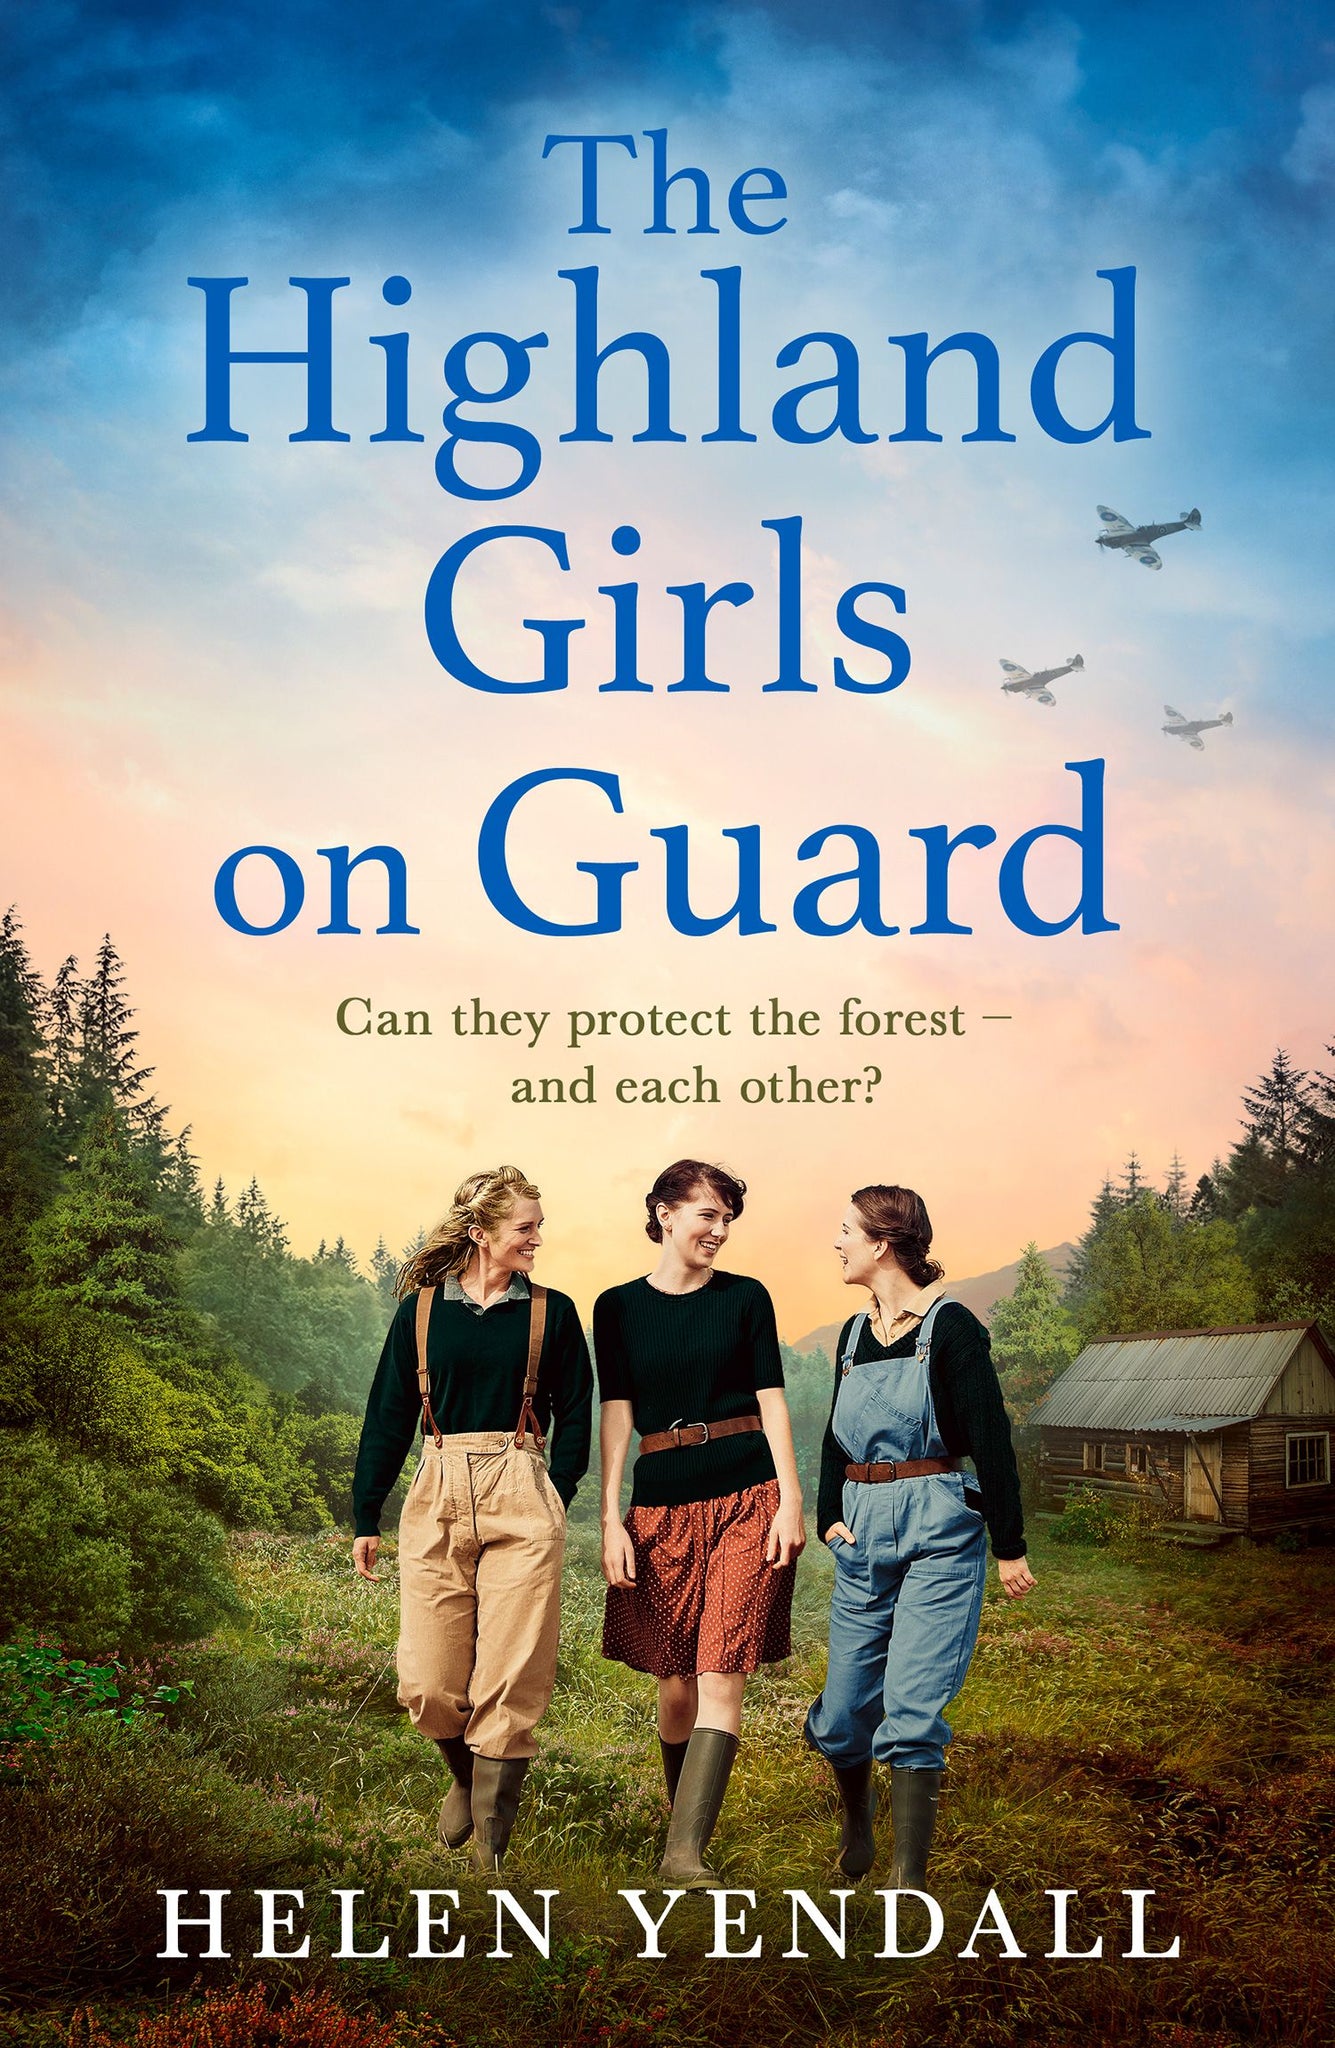 The Highland Girls series - The Highland Girls on Guard (The Highland Girls series, Book 2)